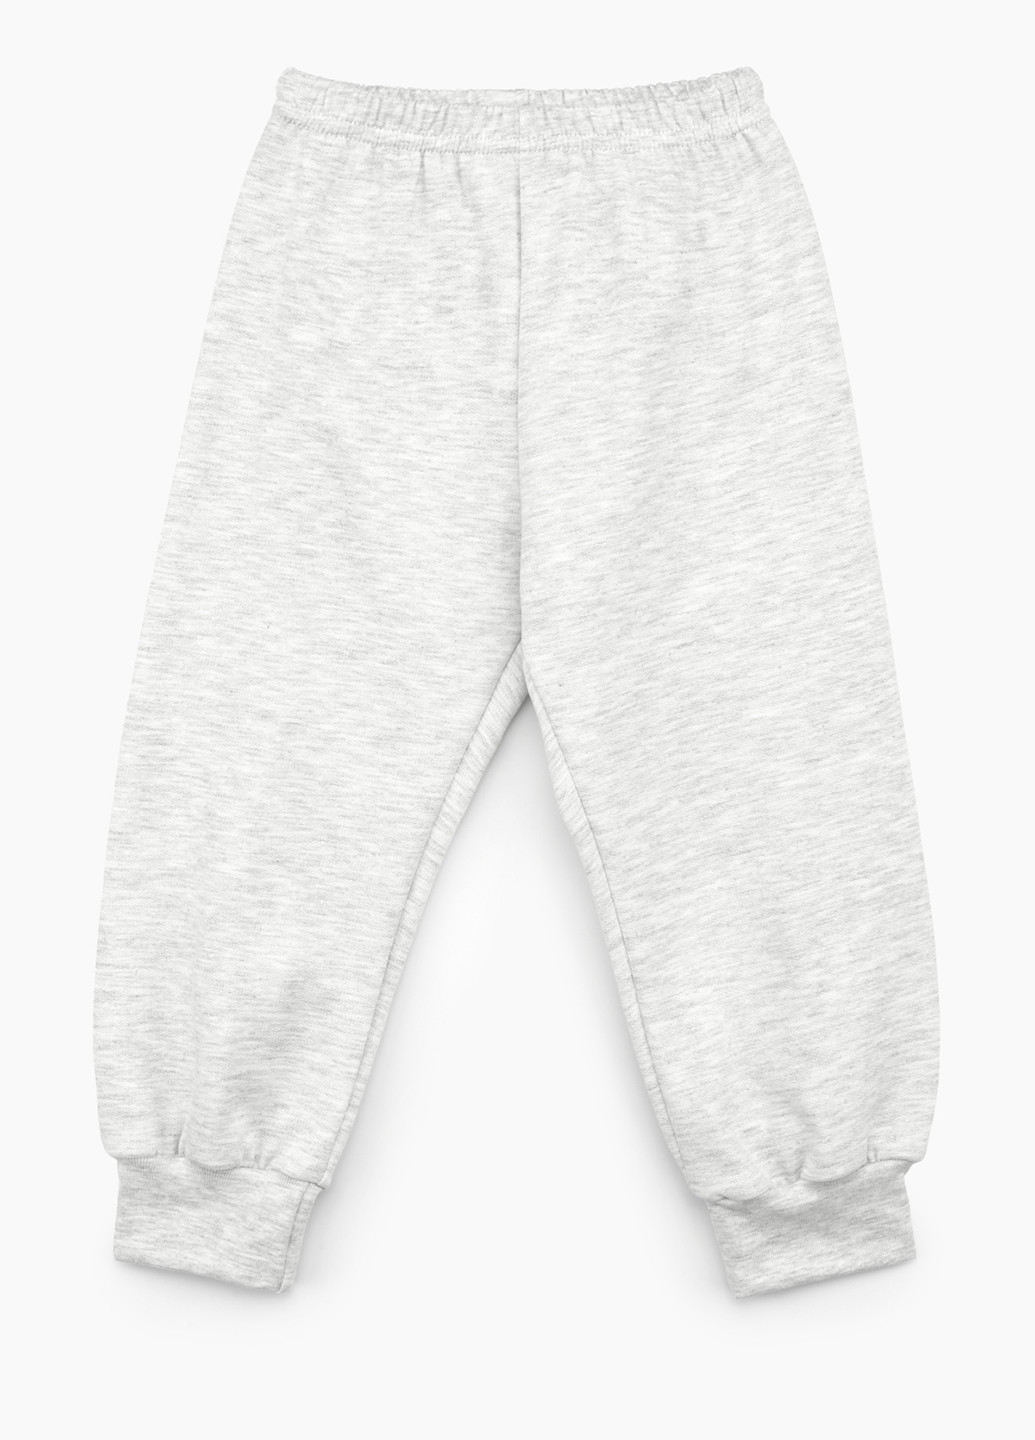 Комбинированная всесезон пижама (свитшот, брюки) свитшот + брюки Timi